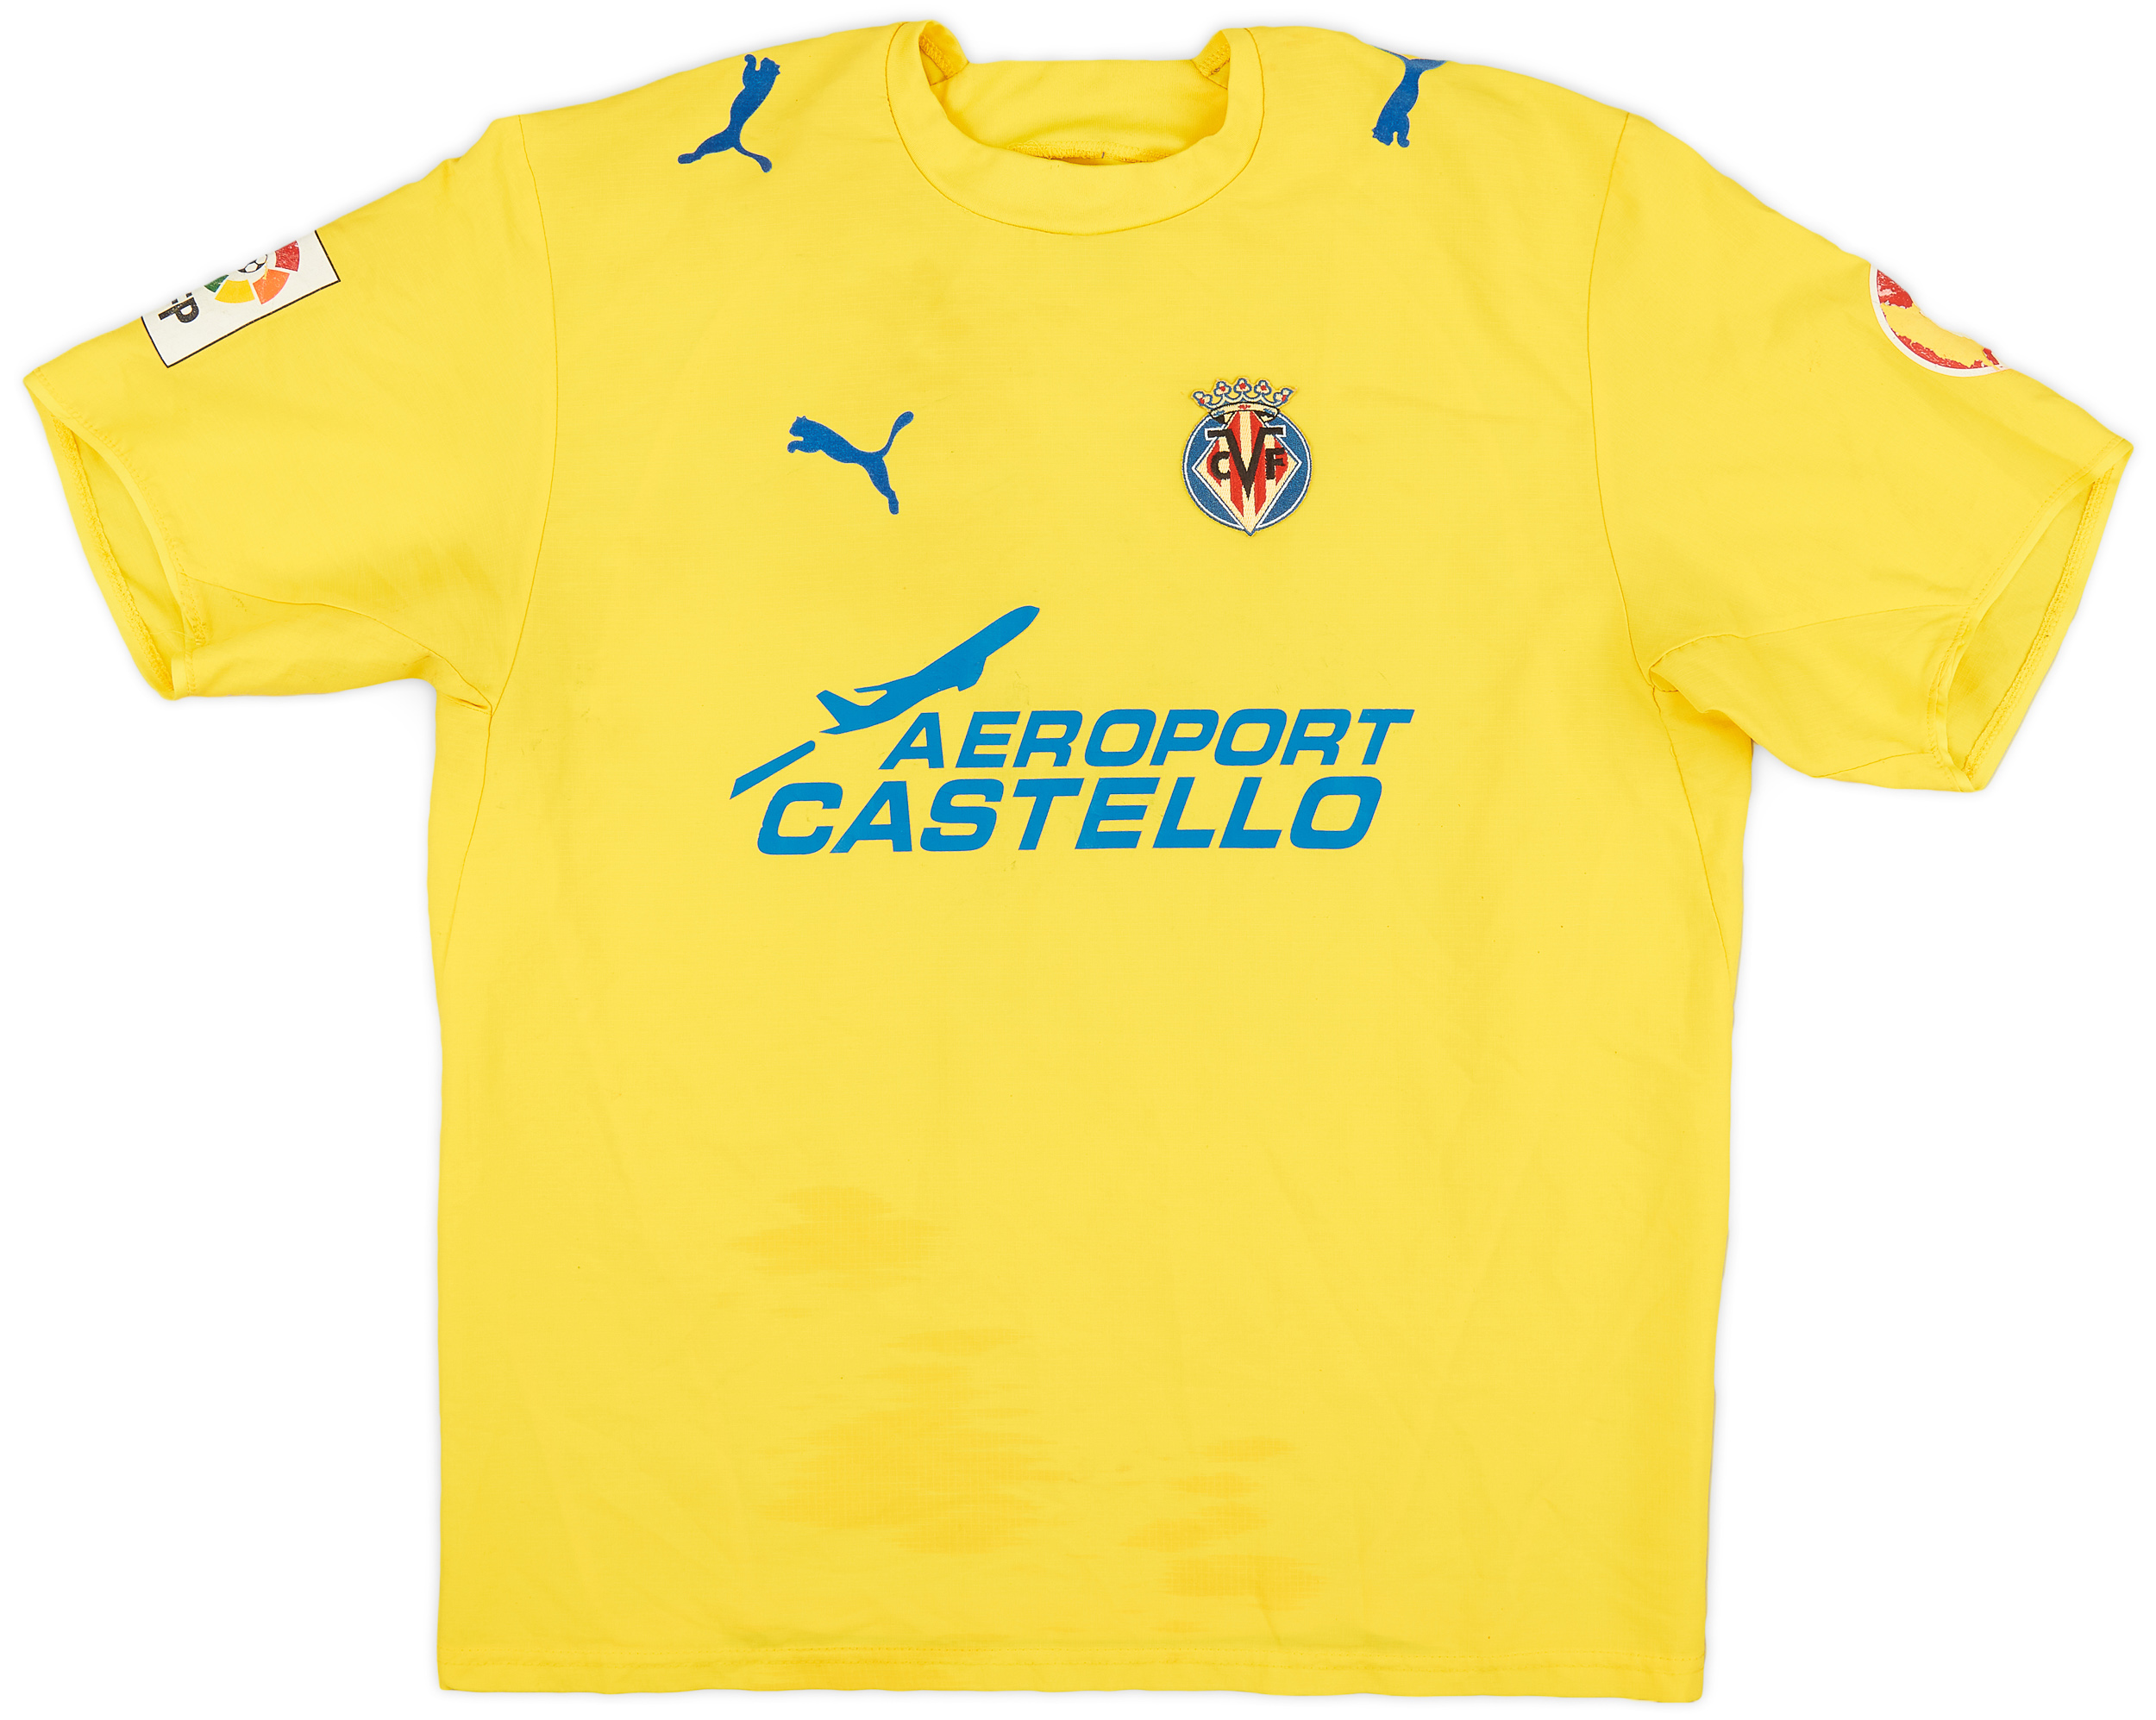 Villarreal  home Camiseta (Original)